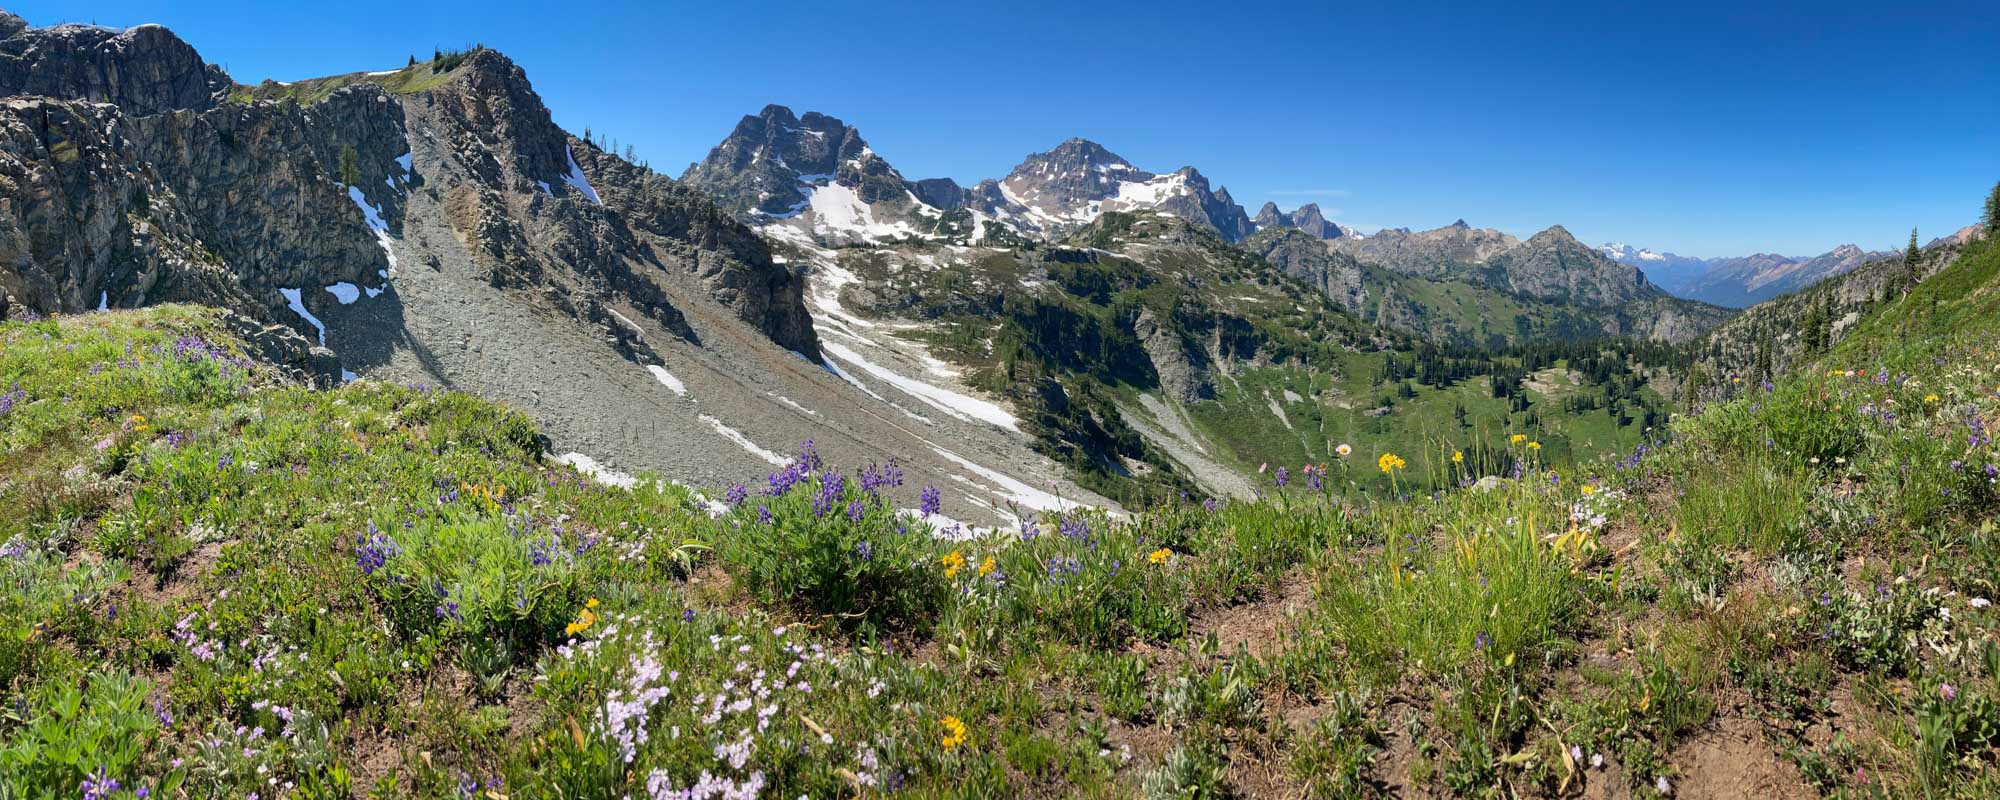 North Cascades National Park, Washington - Banner Wildflowers Mountains